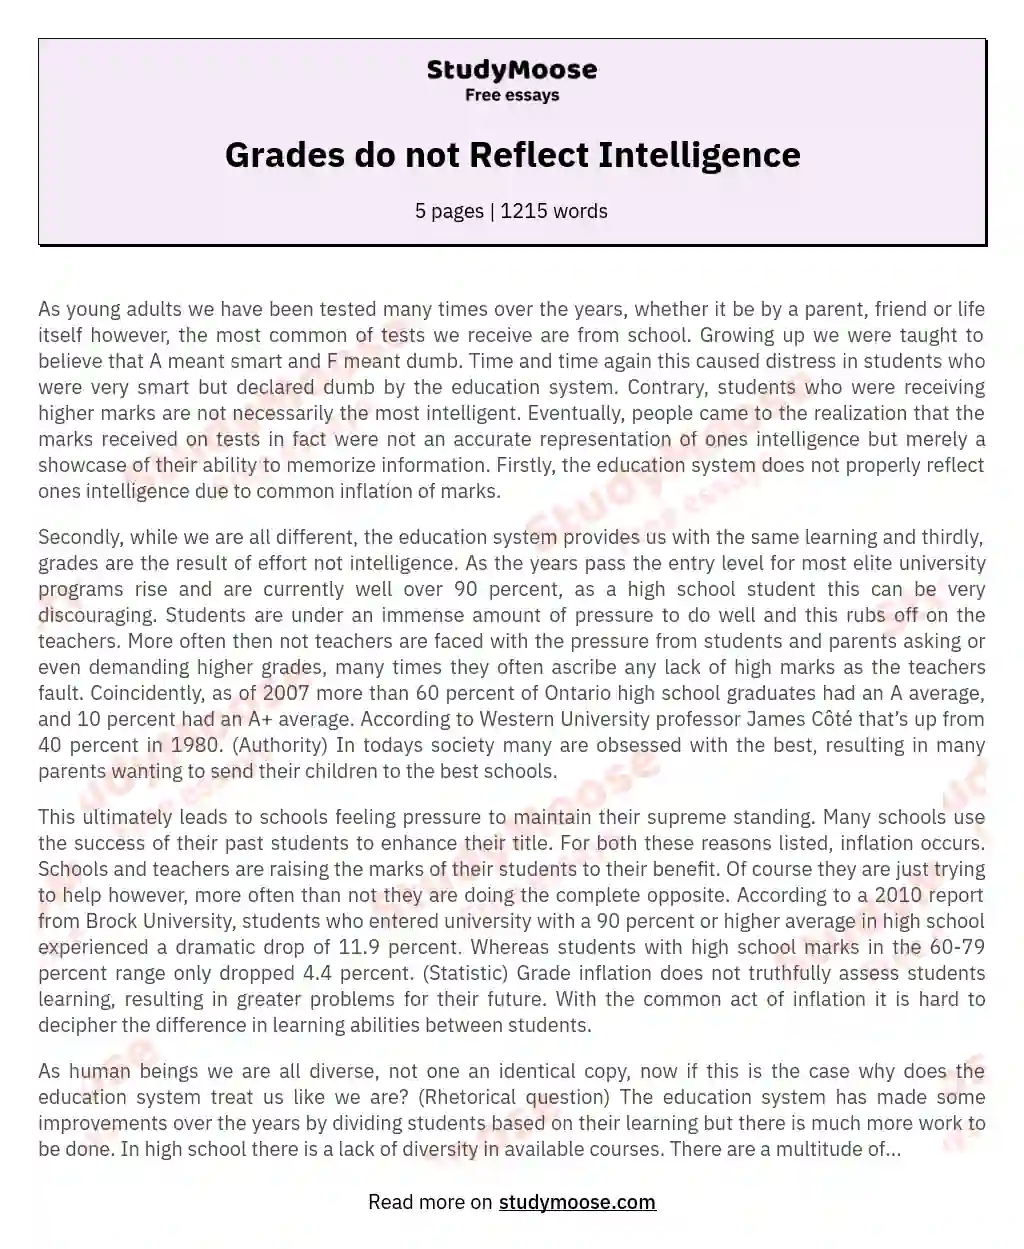 Grades do not Reflect Intelligence essay